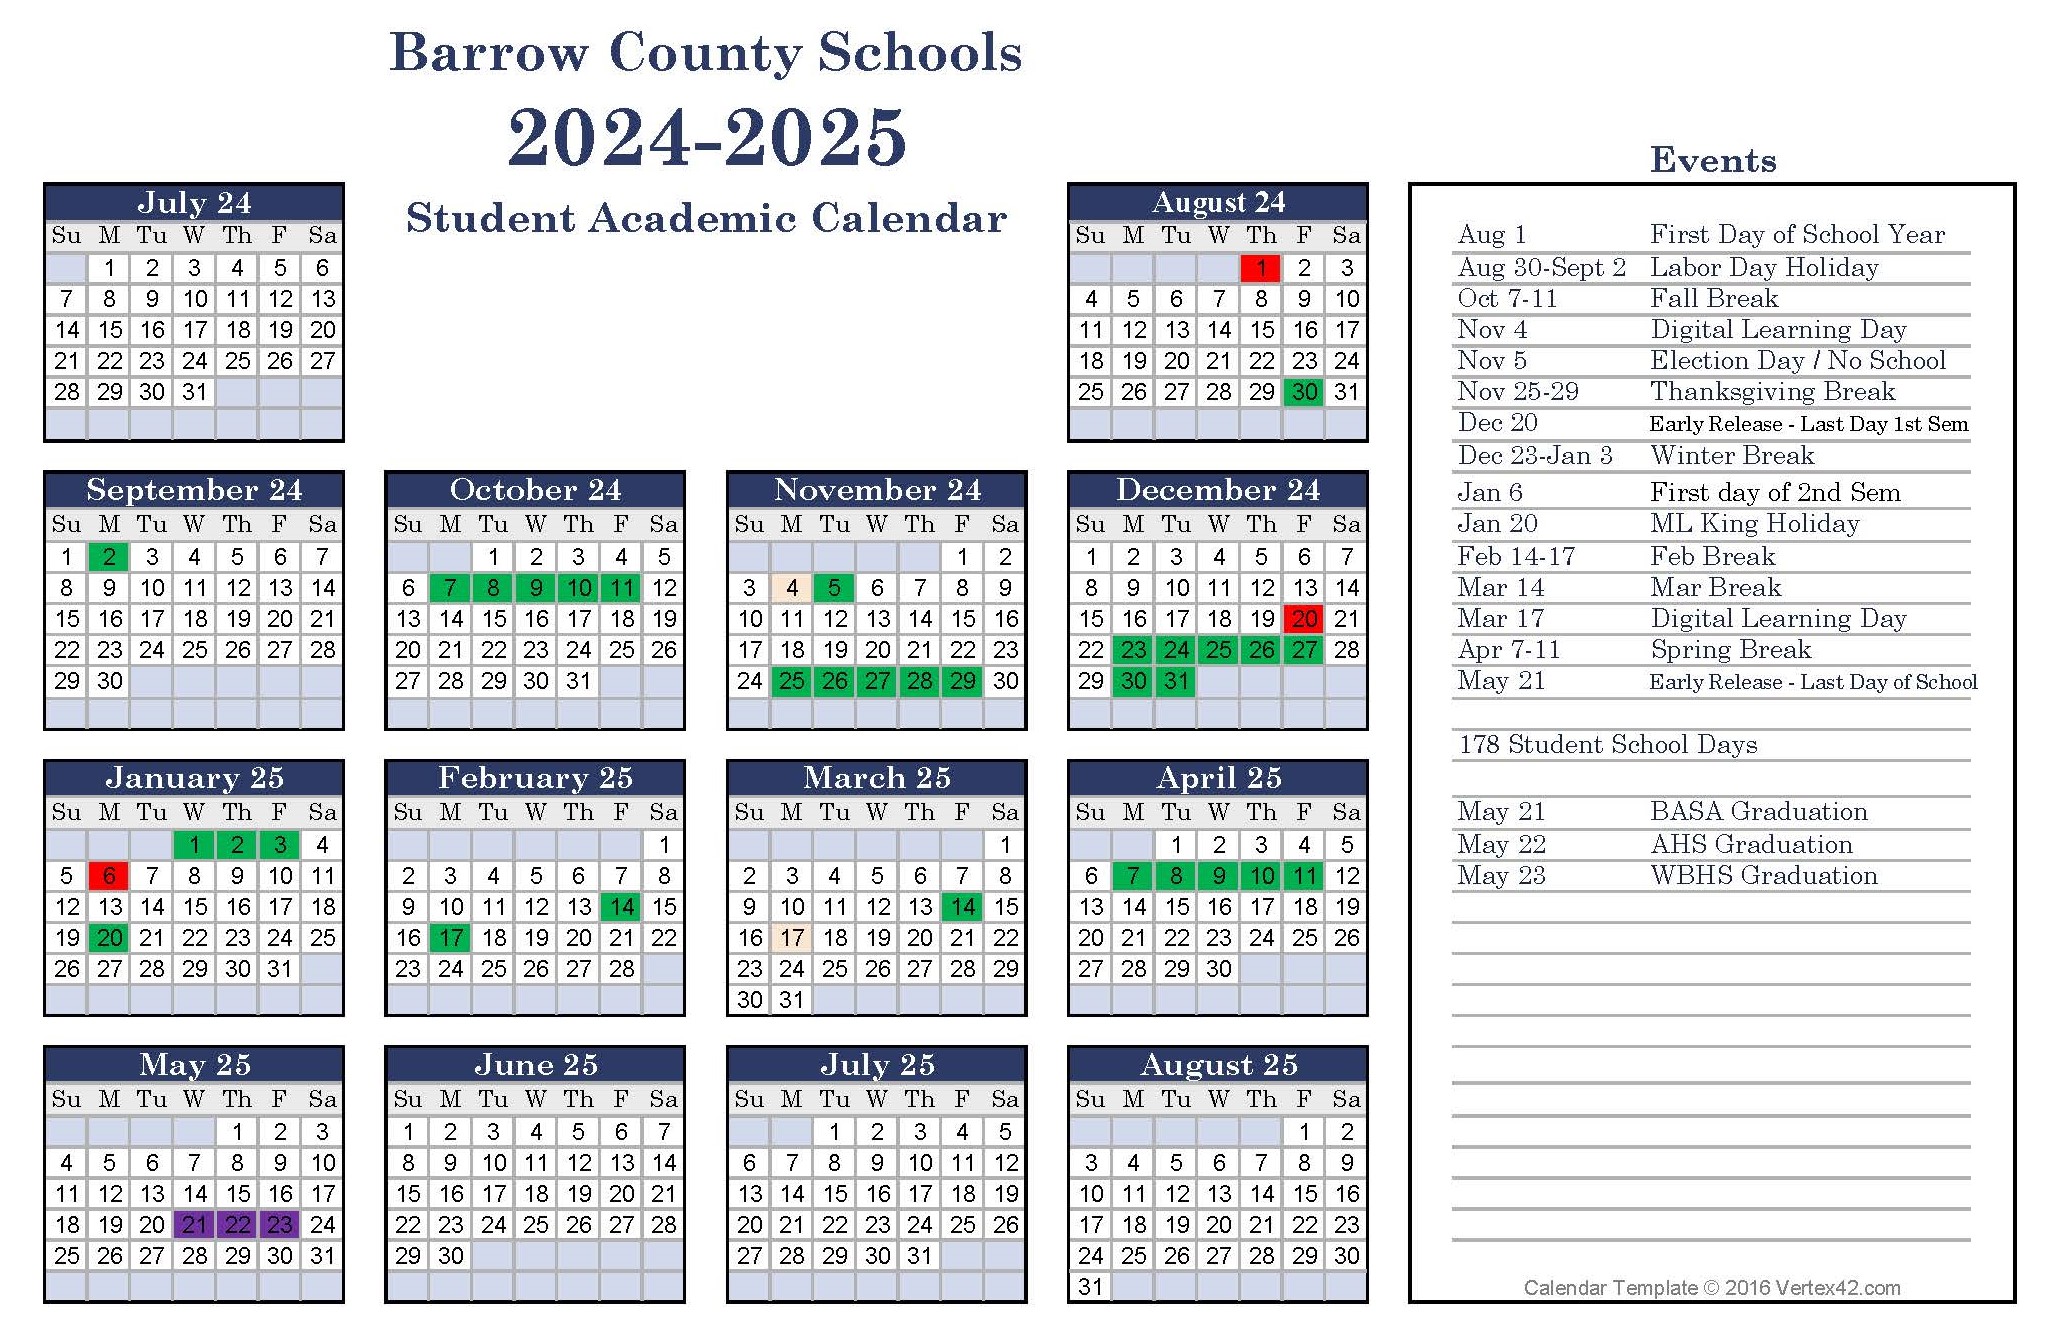 athens-ga-school-calendar-2024-2025-celka-darlene